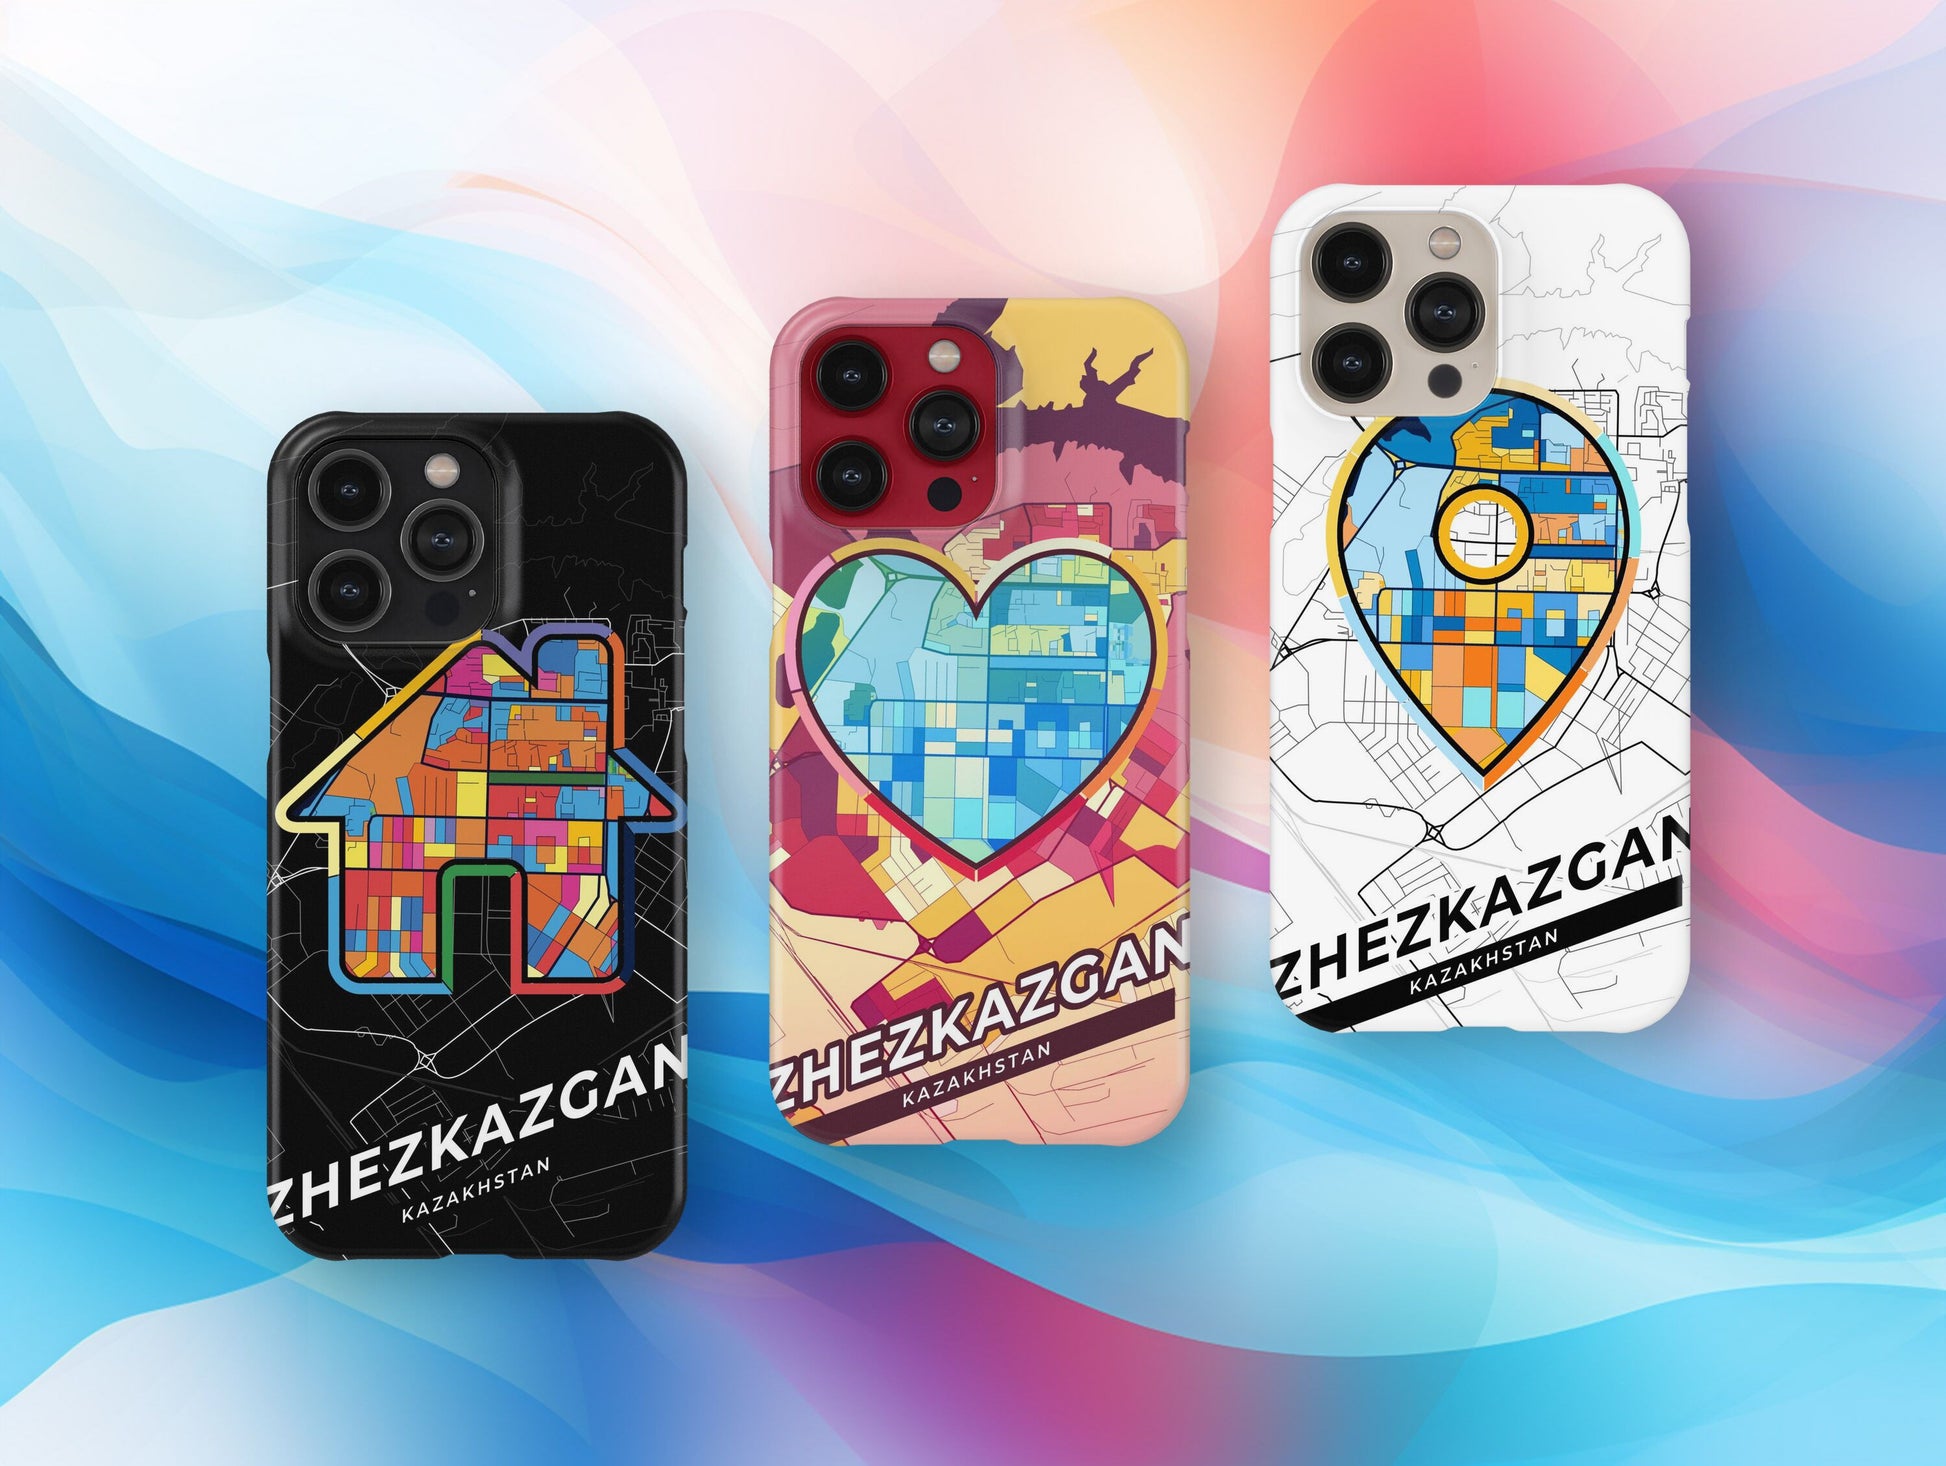 Zhezkazgan Kazakhstan slim phone case with colorful icon